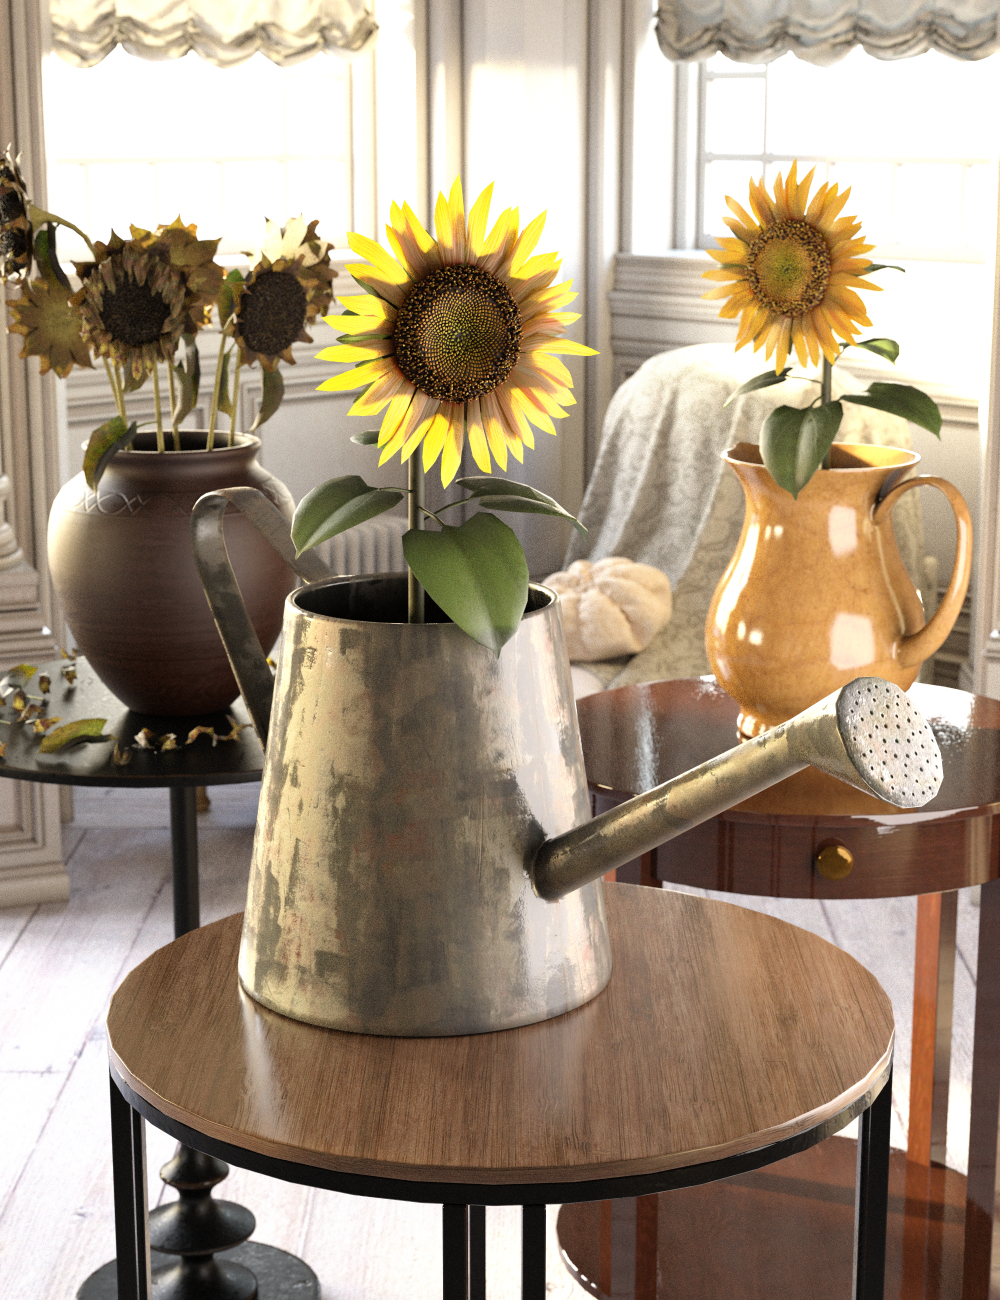 Sunflower Adornment by: Merlin Studios, 3D Models by Daz 3D